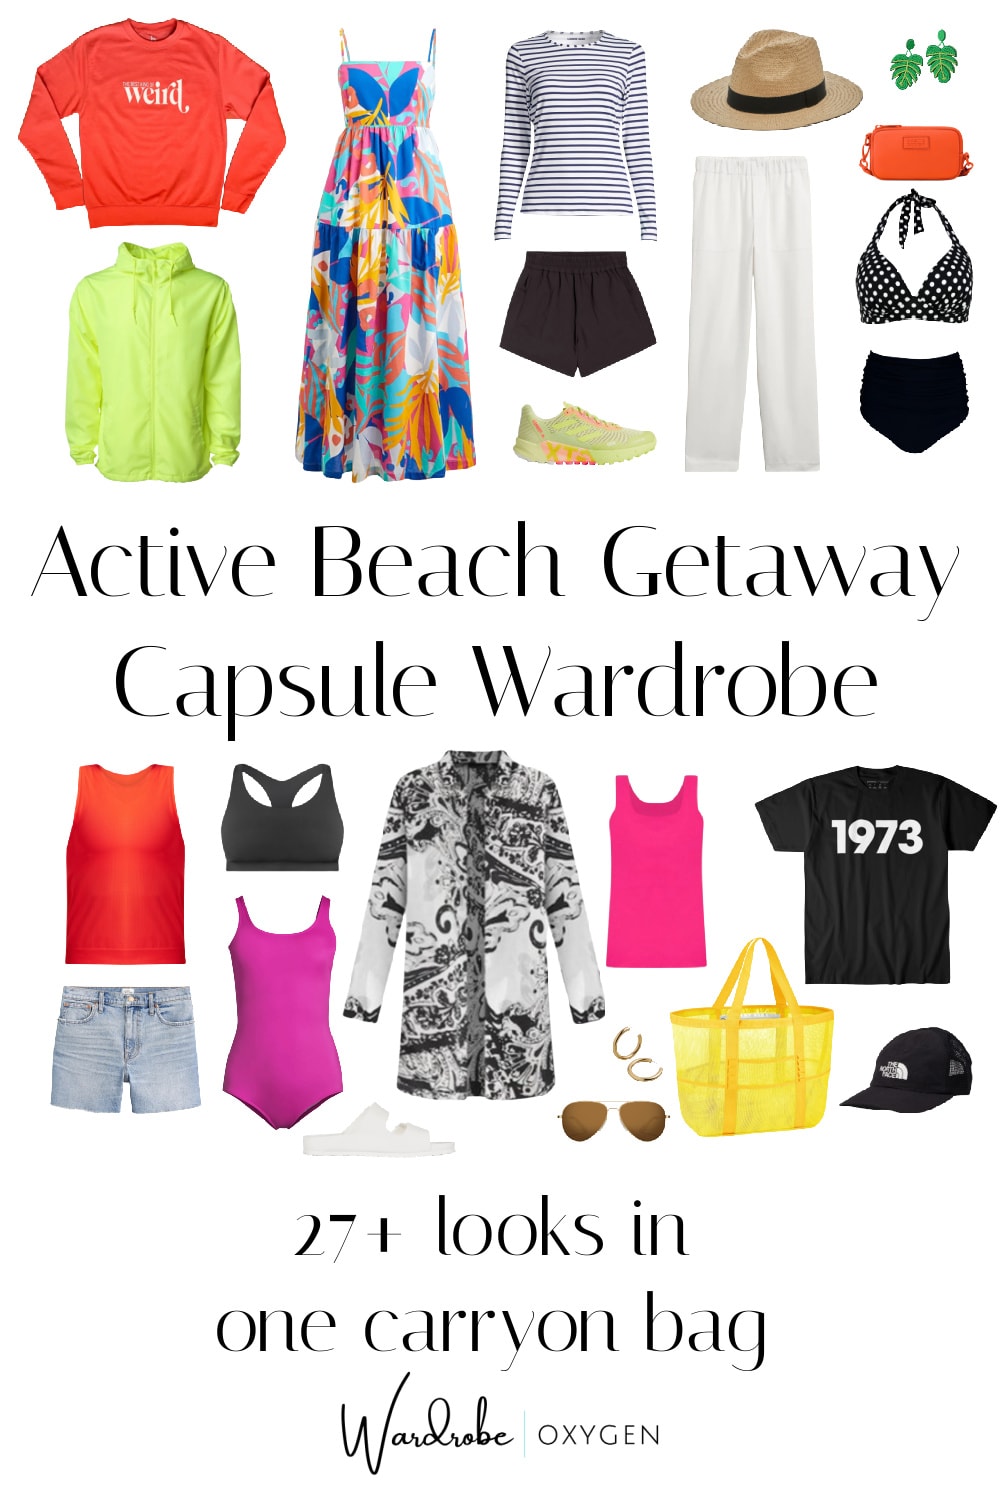 Active Beach Getaway Capsule Wardrobe: 1 Carry-on, 27 Looks